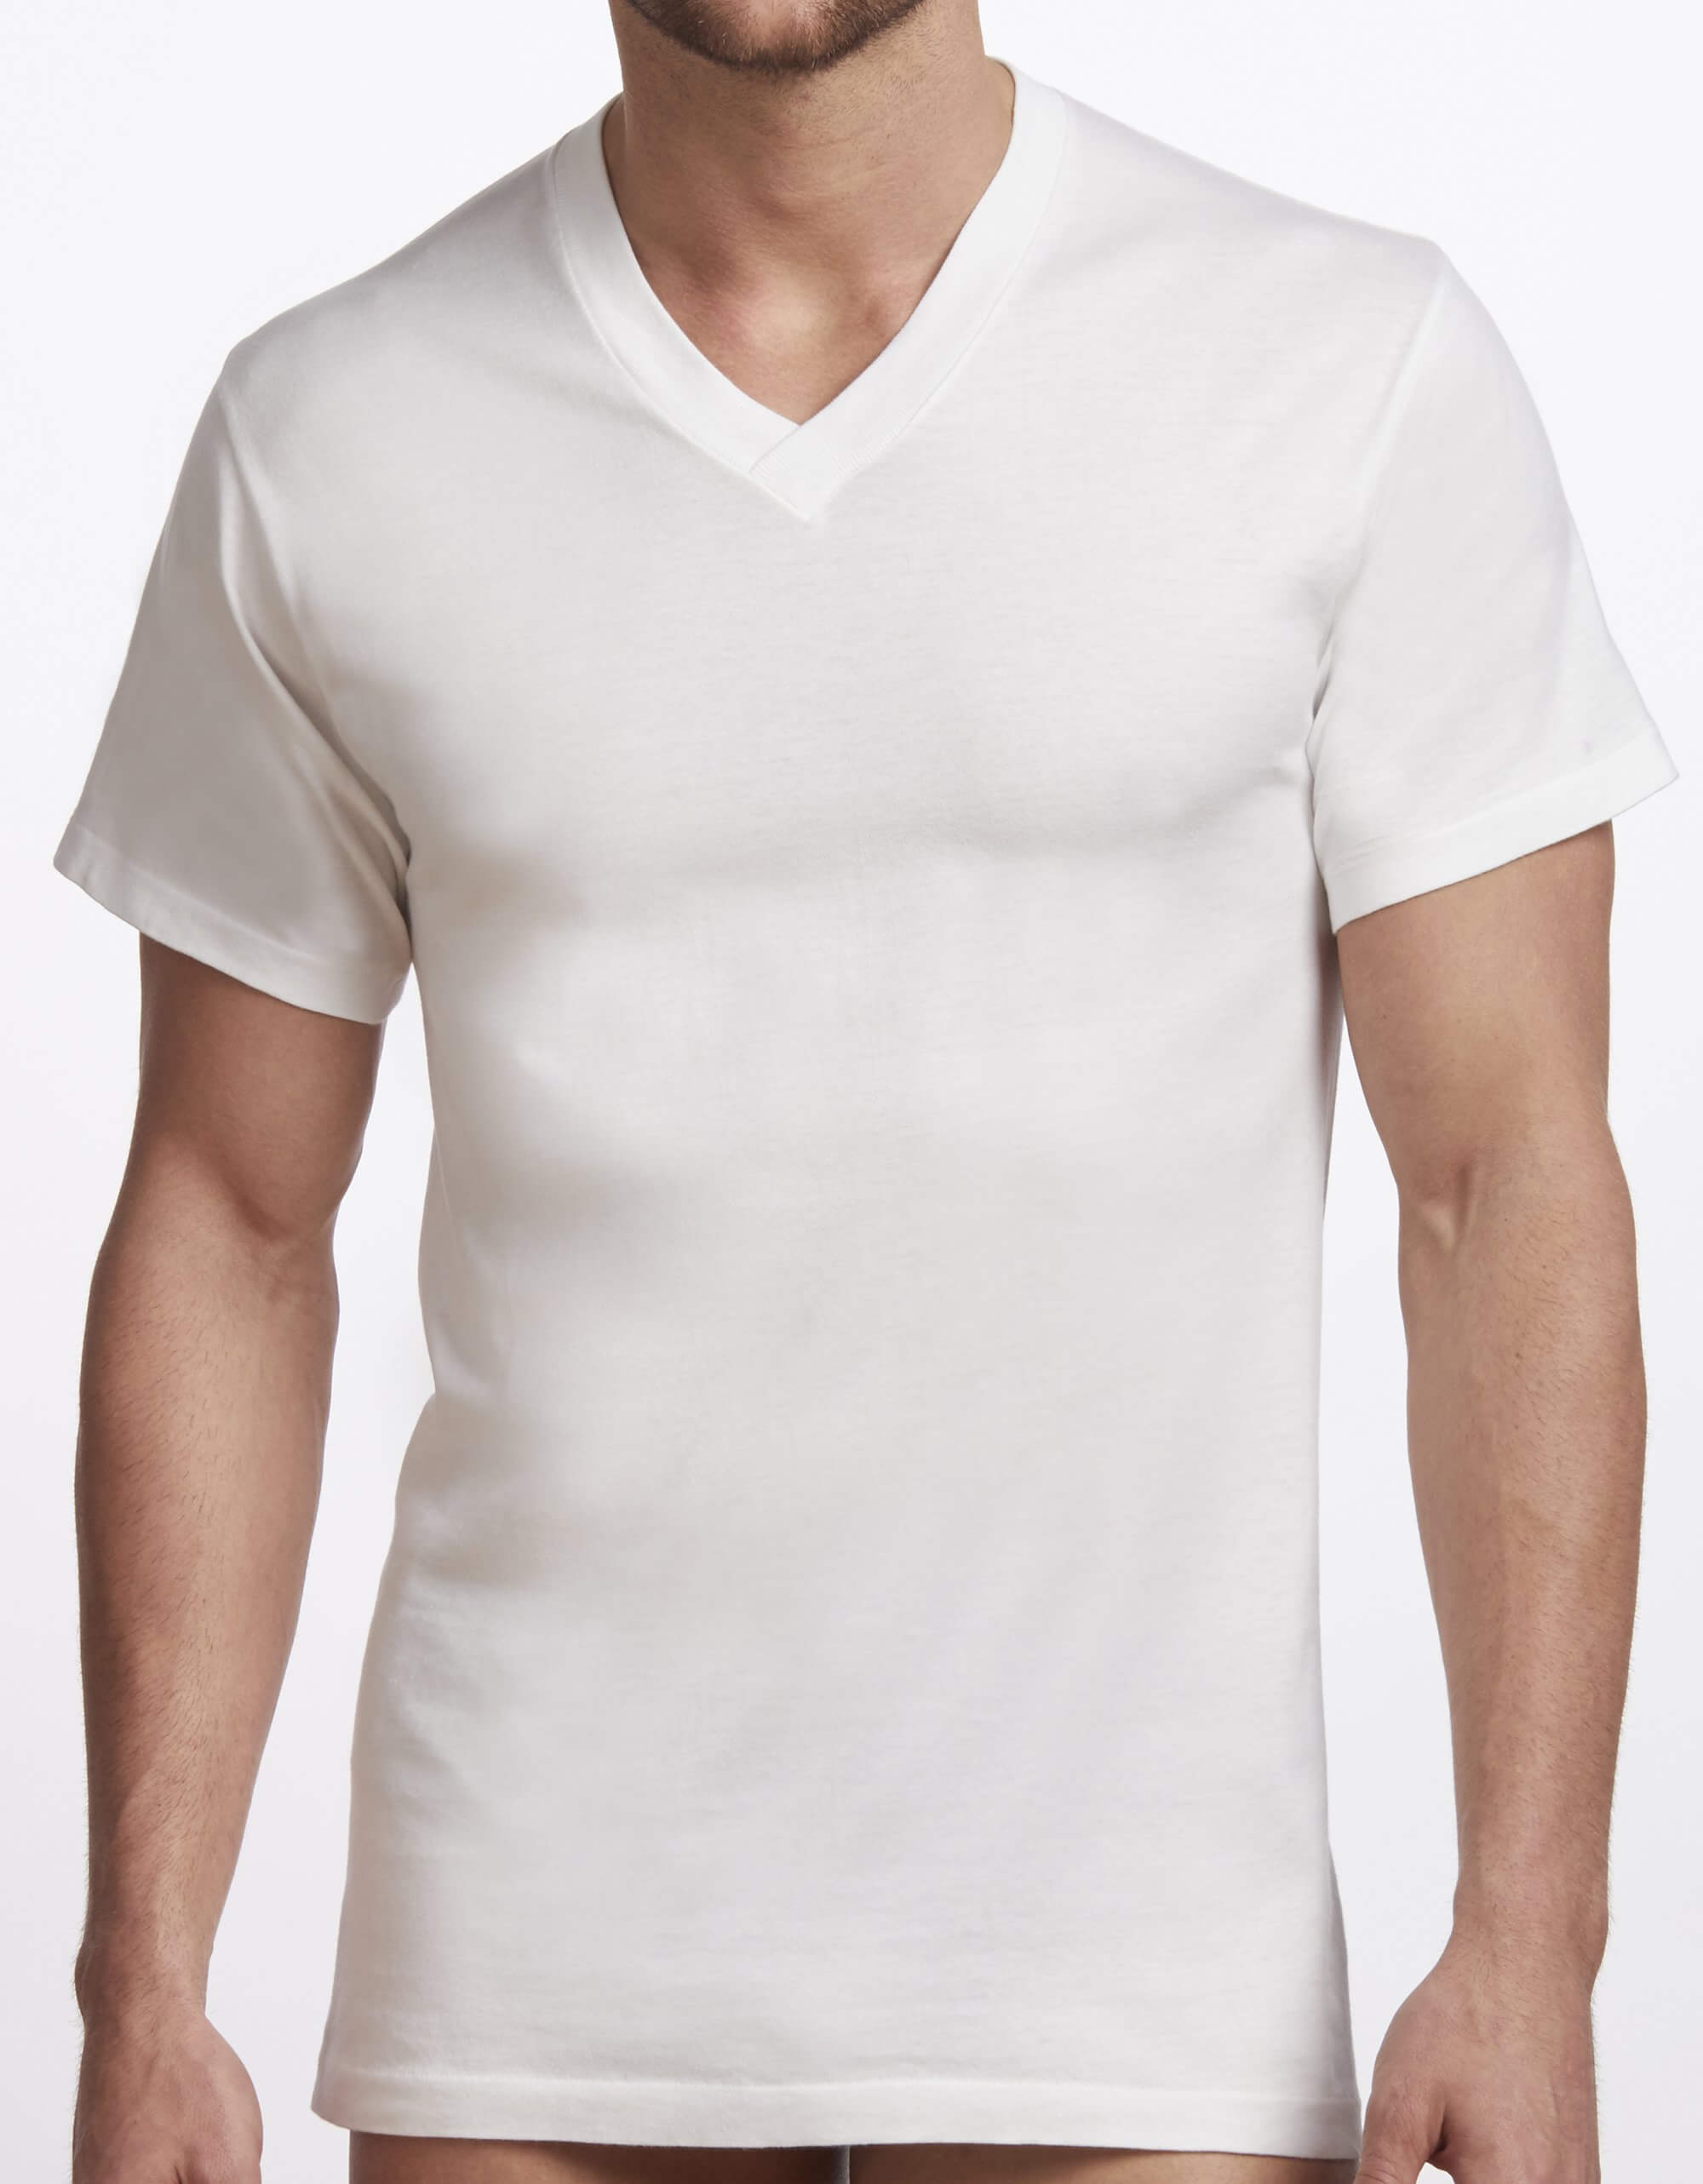 MIER Men Long Sleeve Cotton Shirts Crew Neck Casual T-Shirt